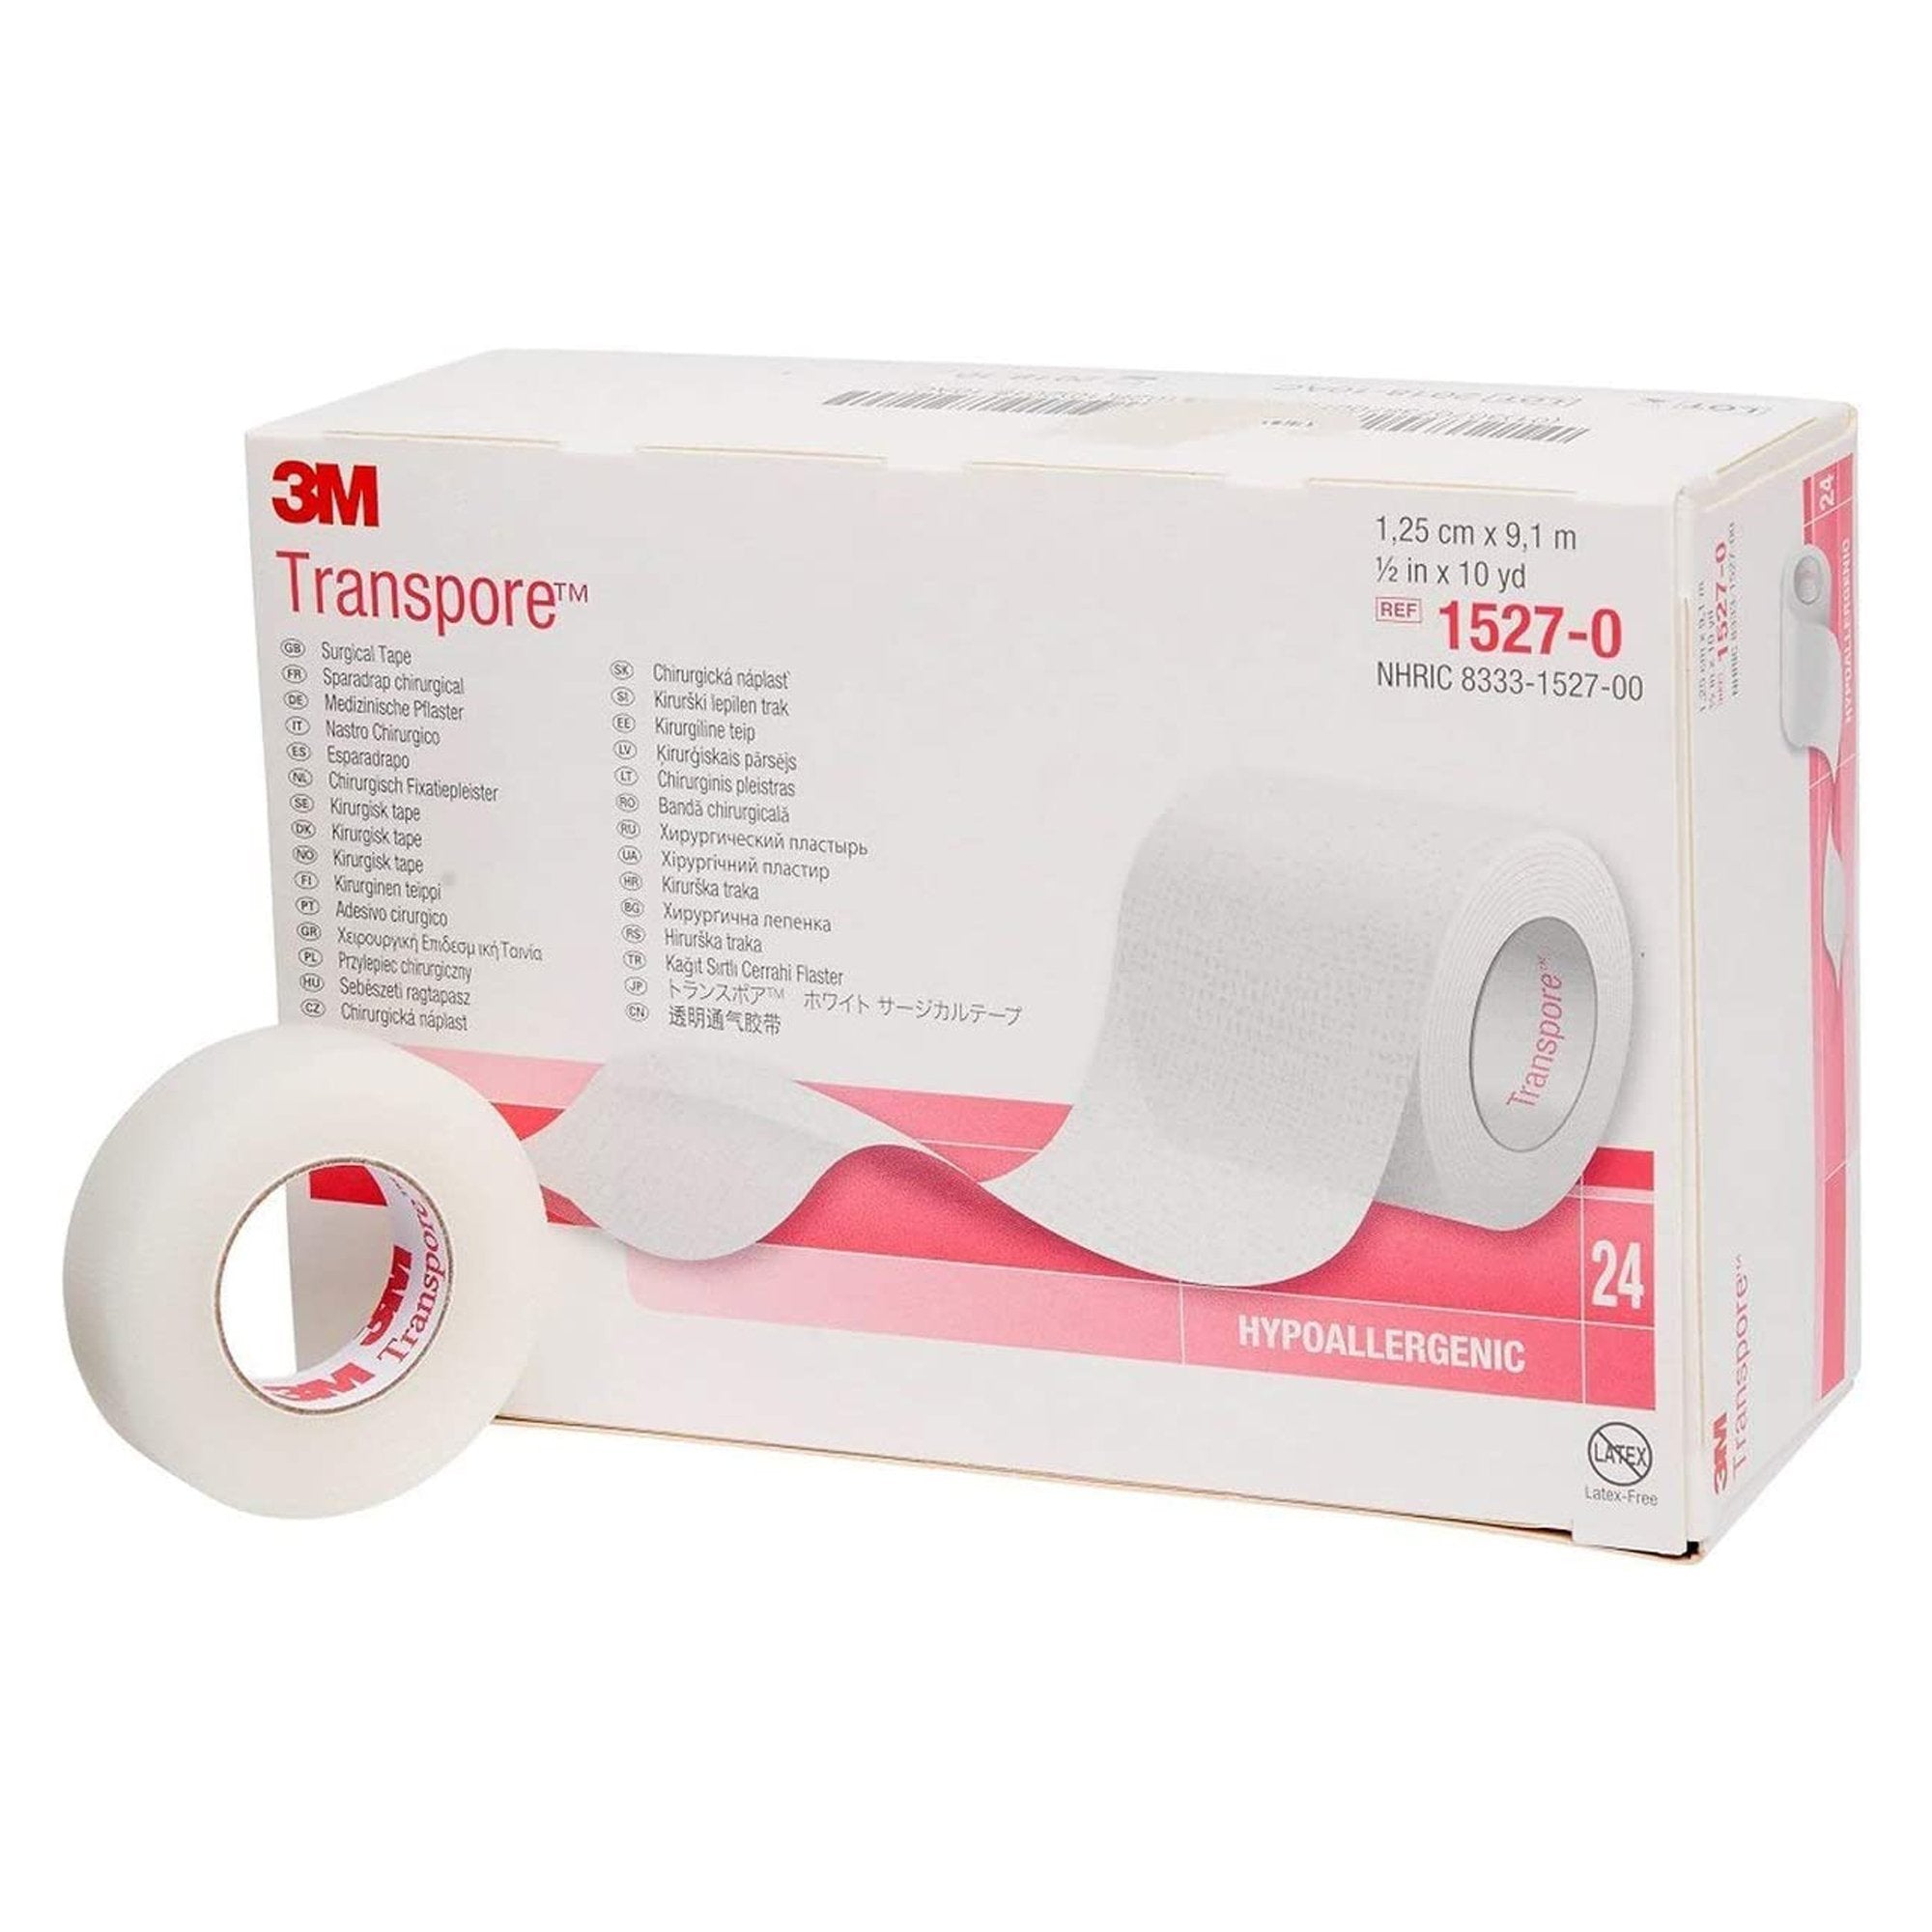 3M™ Transpore™ Medical Tape (1/2 inch)